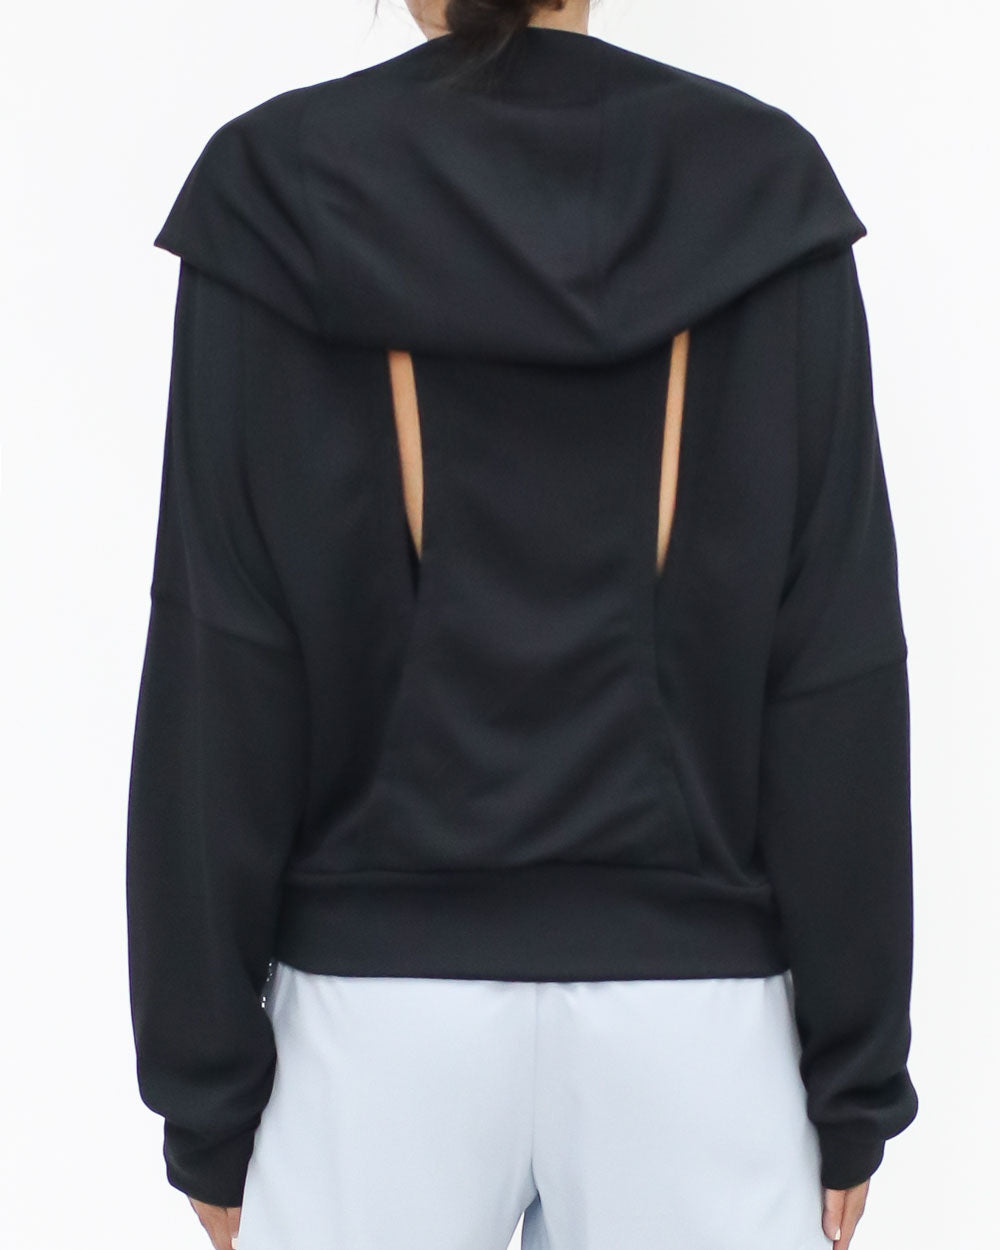 black cutout back hoodie sports top *pre-order*